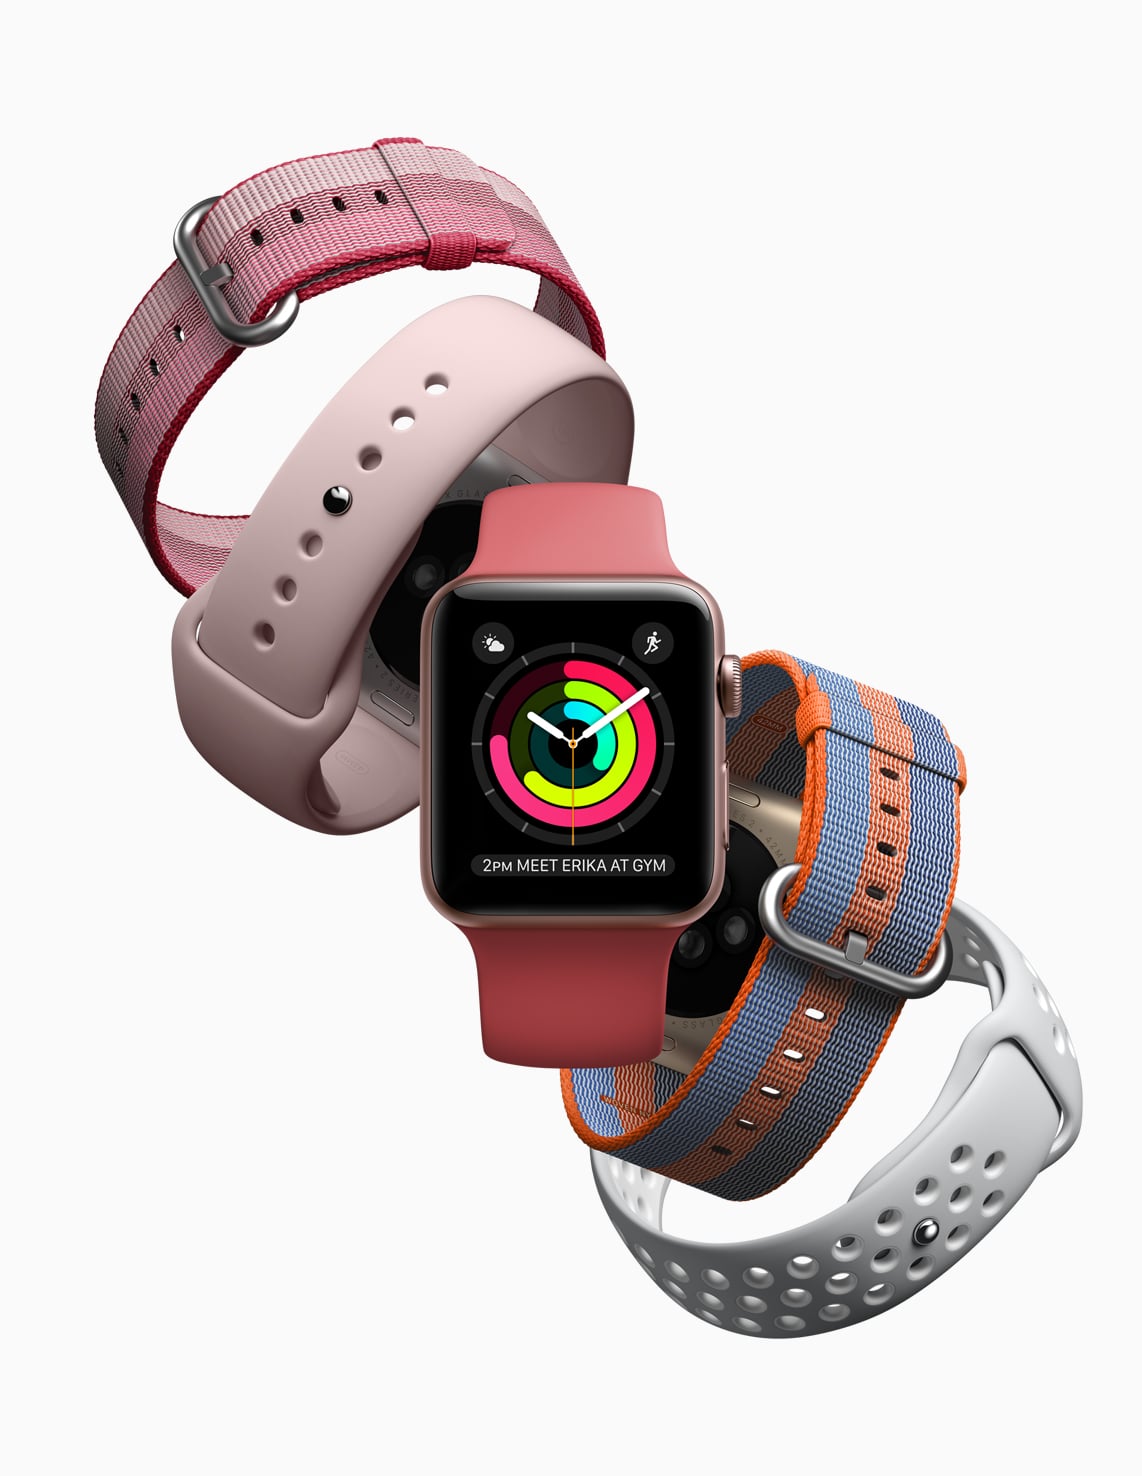 New Apple Watch Band Colors 2017 | POPSUGAR Tech